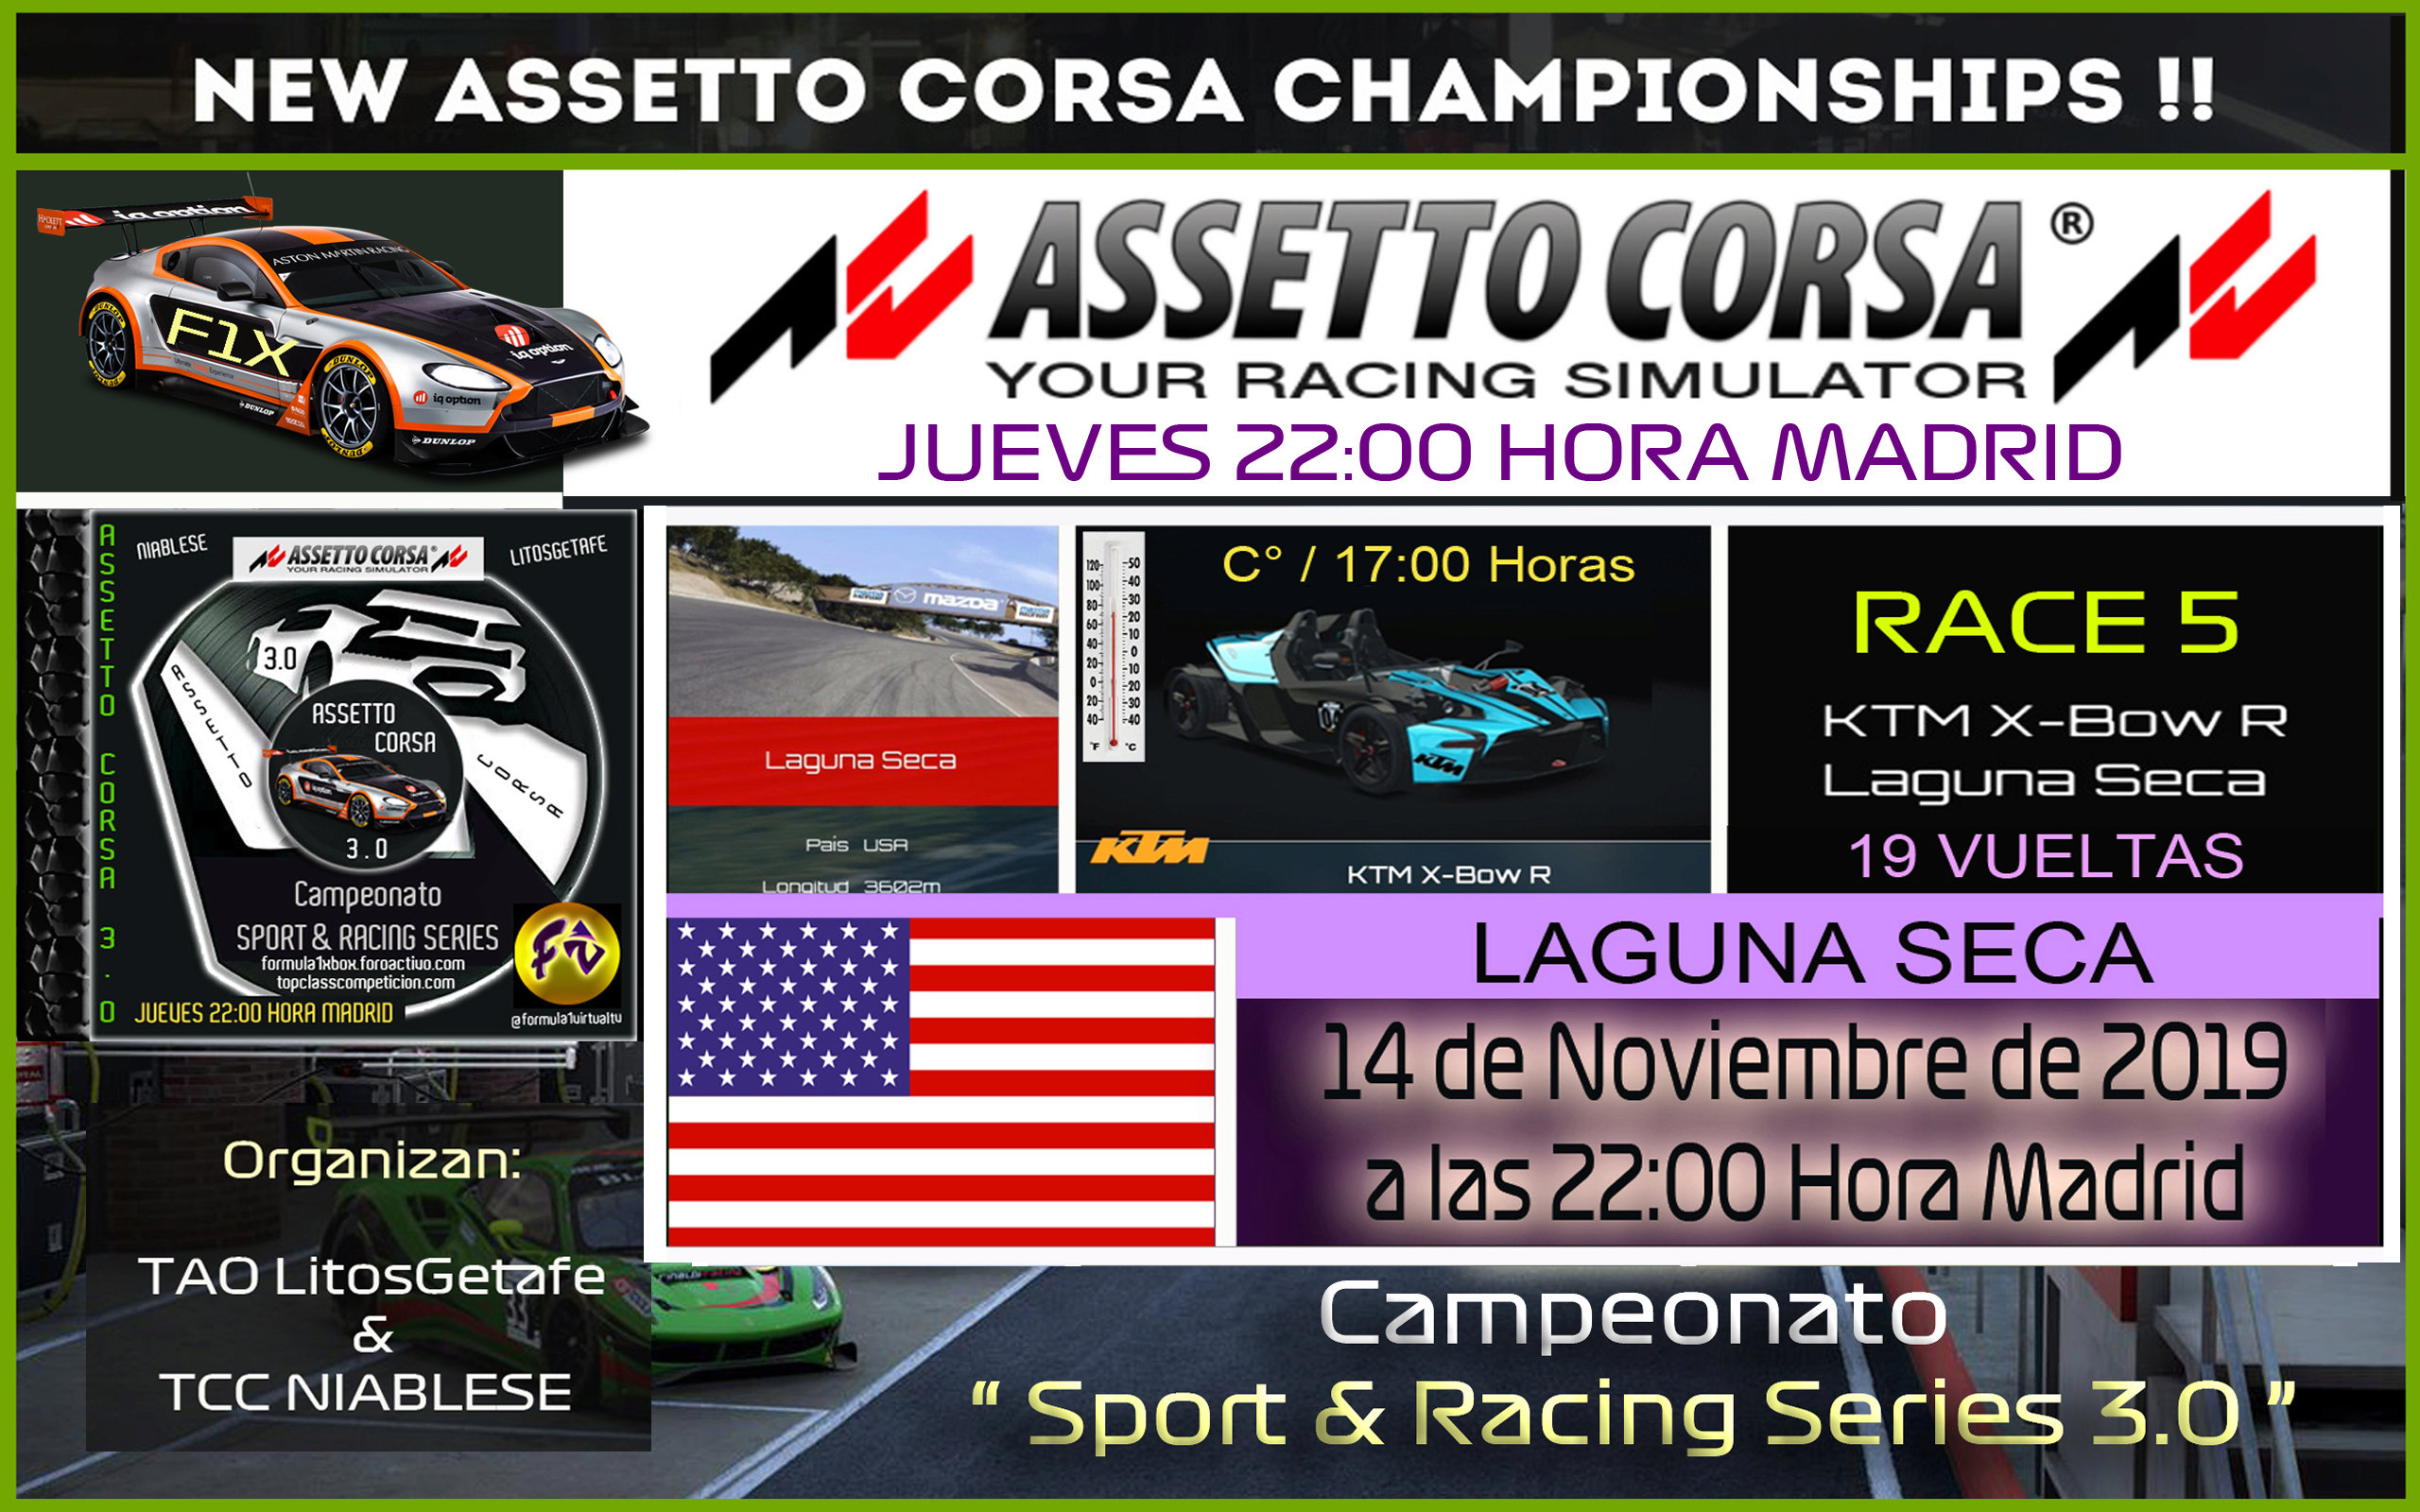 ASSETTO CORSA /// CAMPEONATO SPORT & RACING SERIES 3.0 /// RACE 5  LAGUNA SECA - RESULTADOS + PODIUM + CLASIFICACION GENERAL Race_510